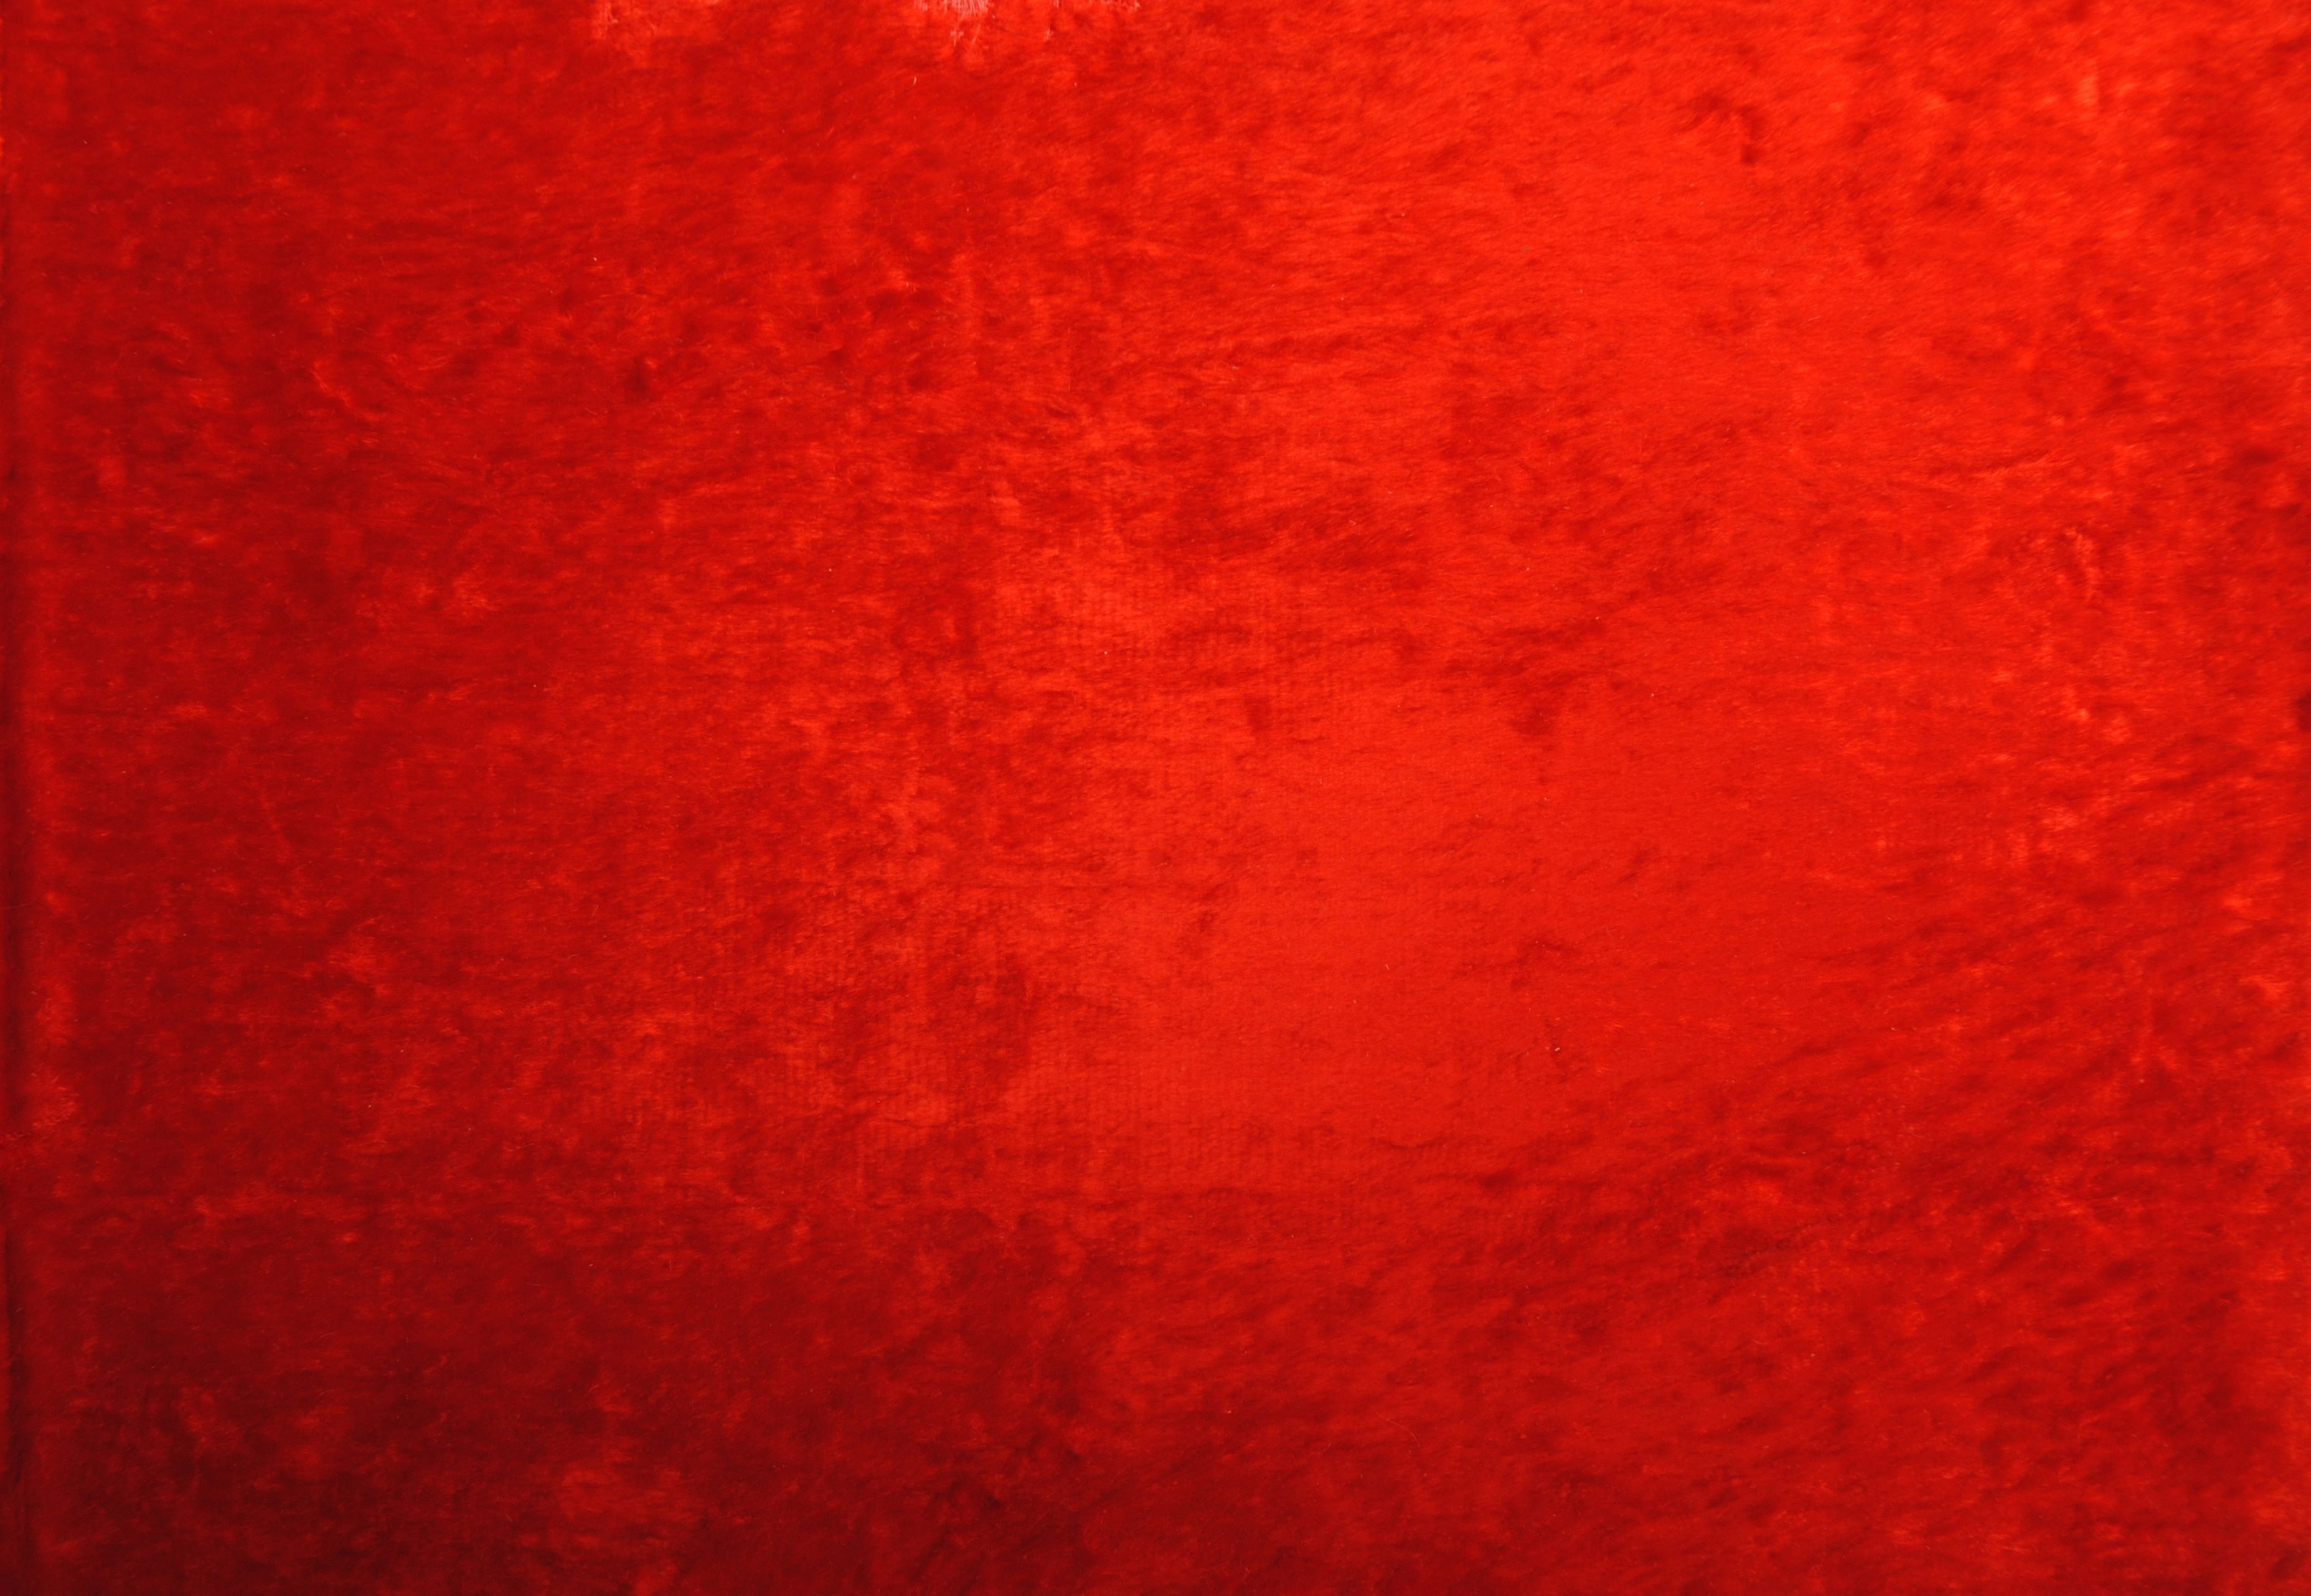 Download Texture Red Velvet Wallpaper 3712x2564 | Full HD Wallpapers